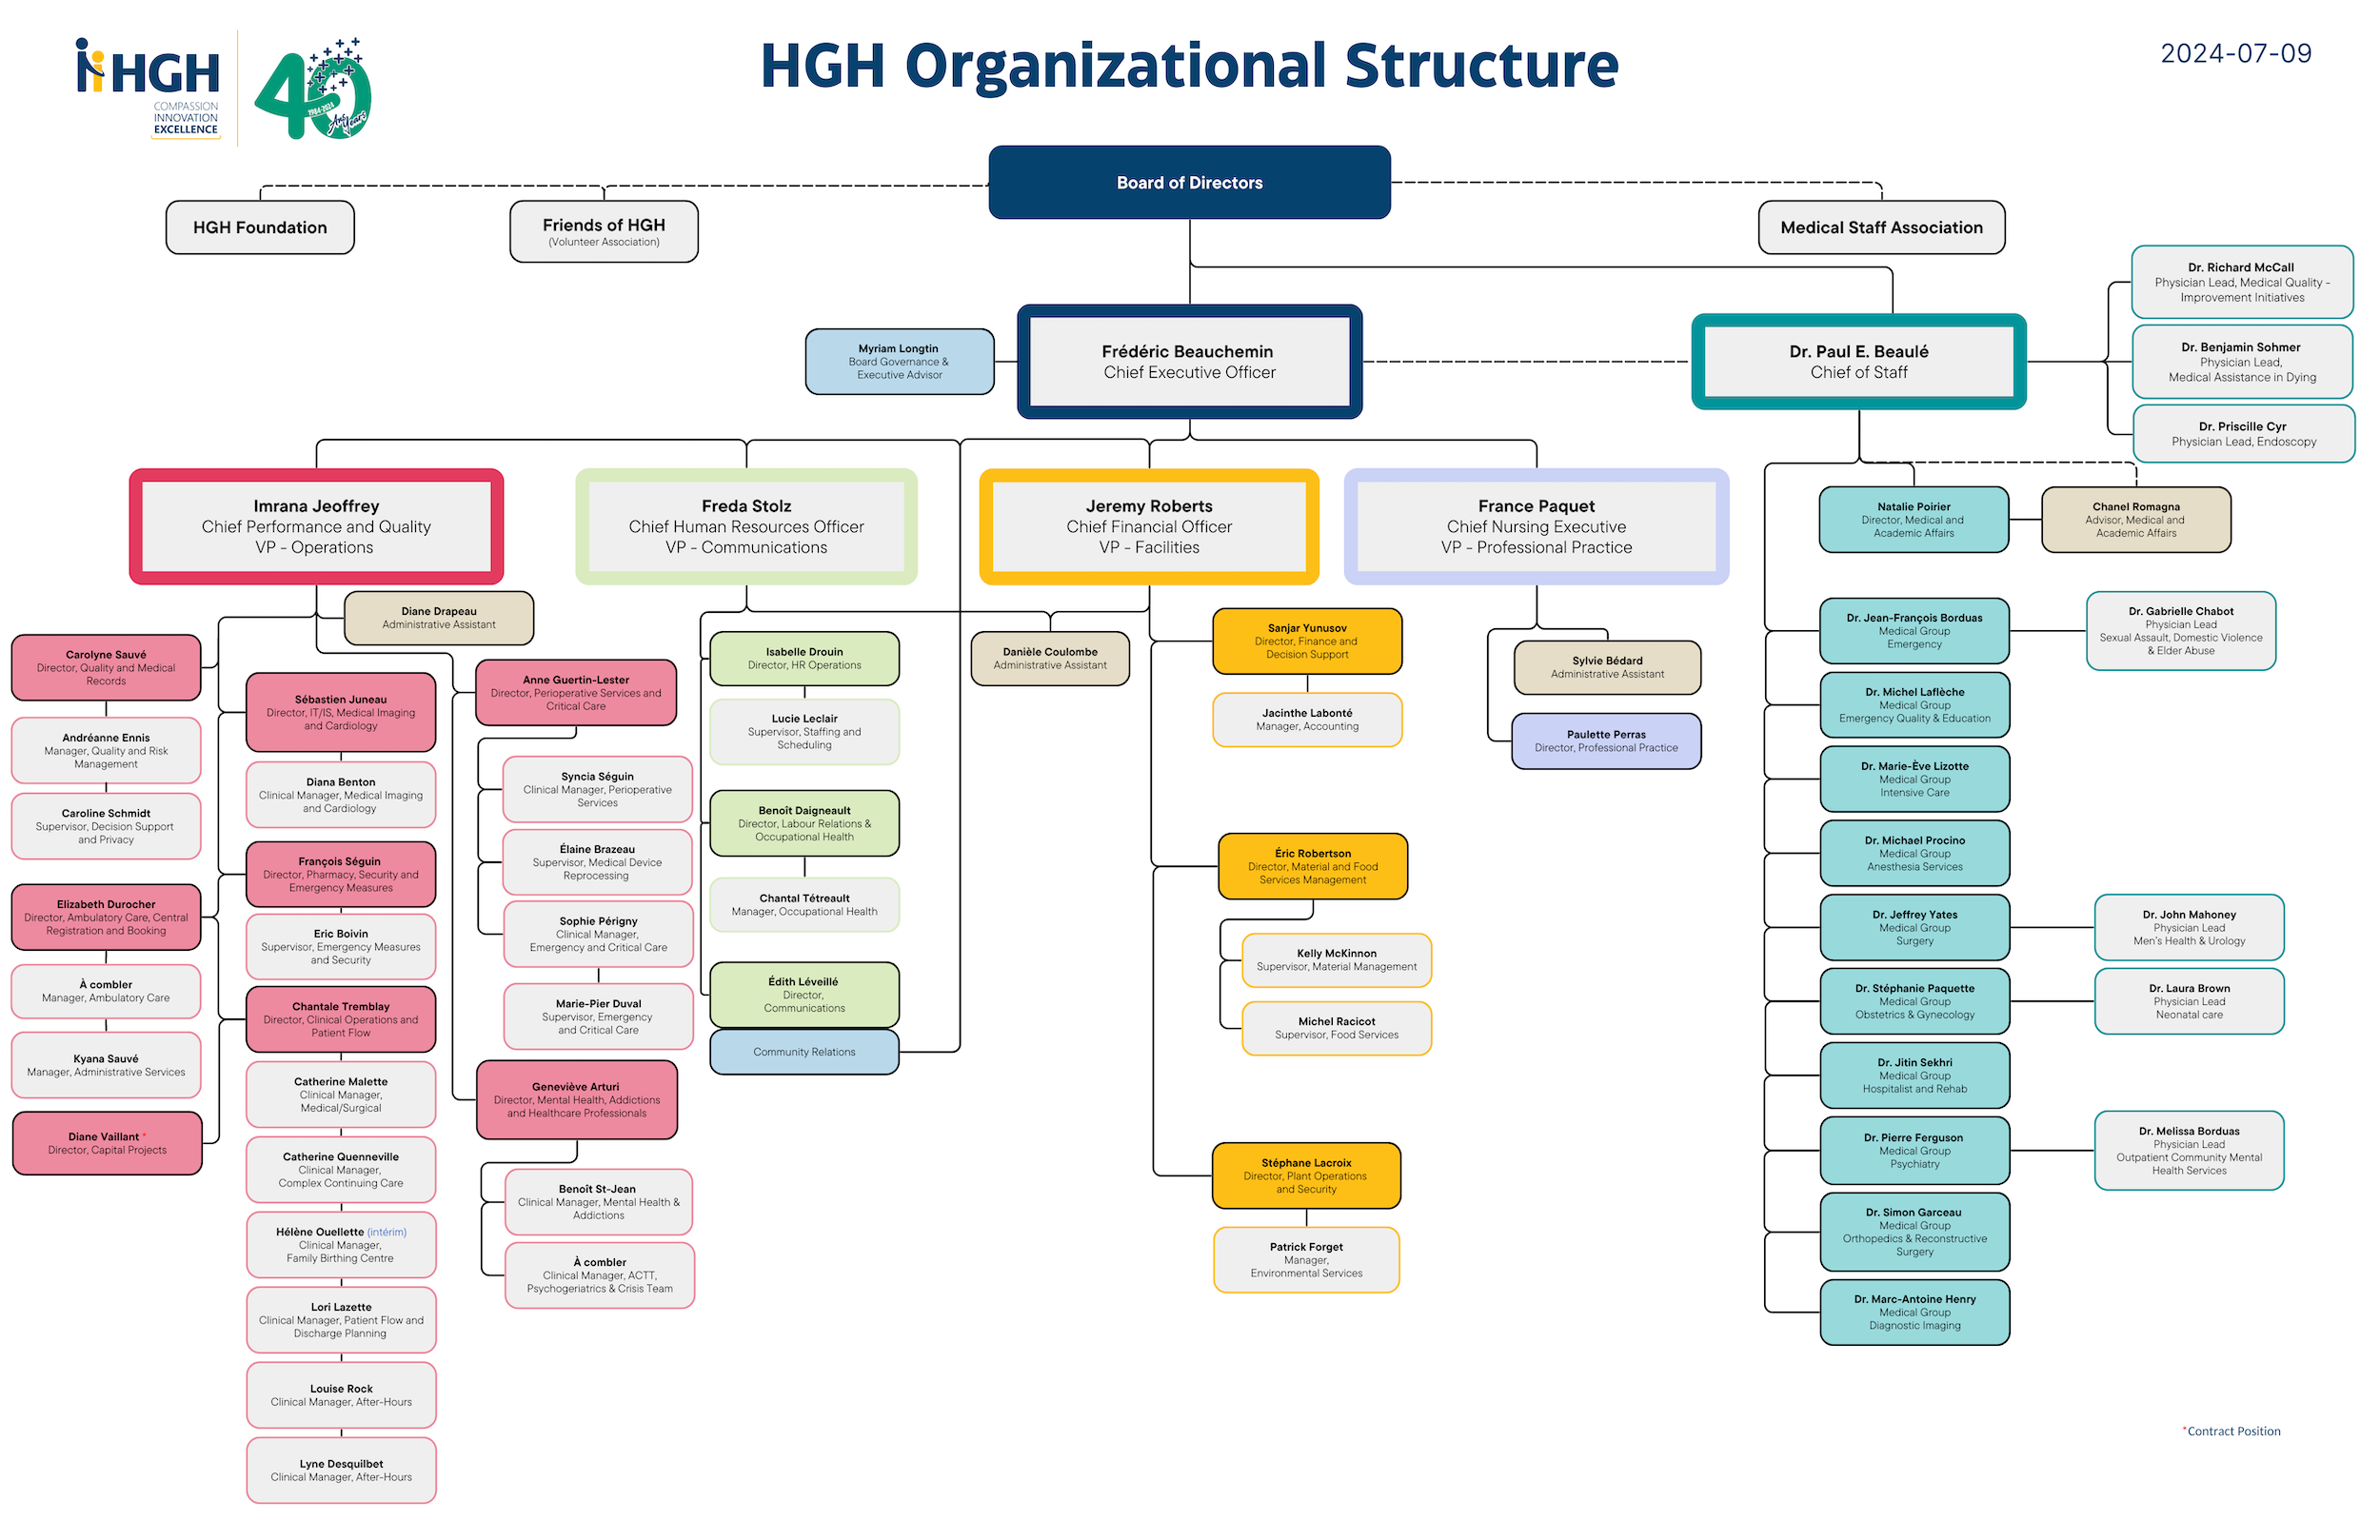 HGH Organizational Chart at July 9, 2024